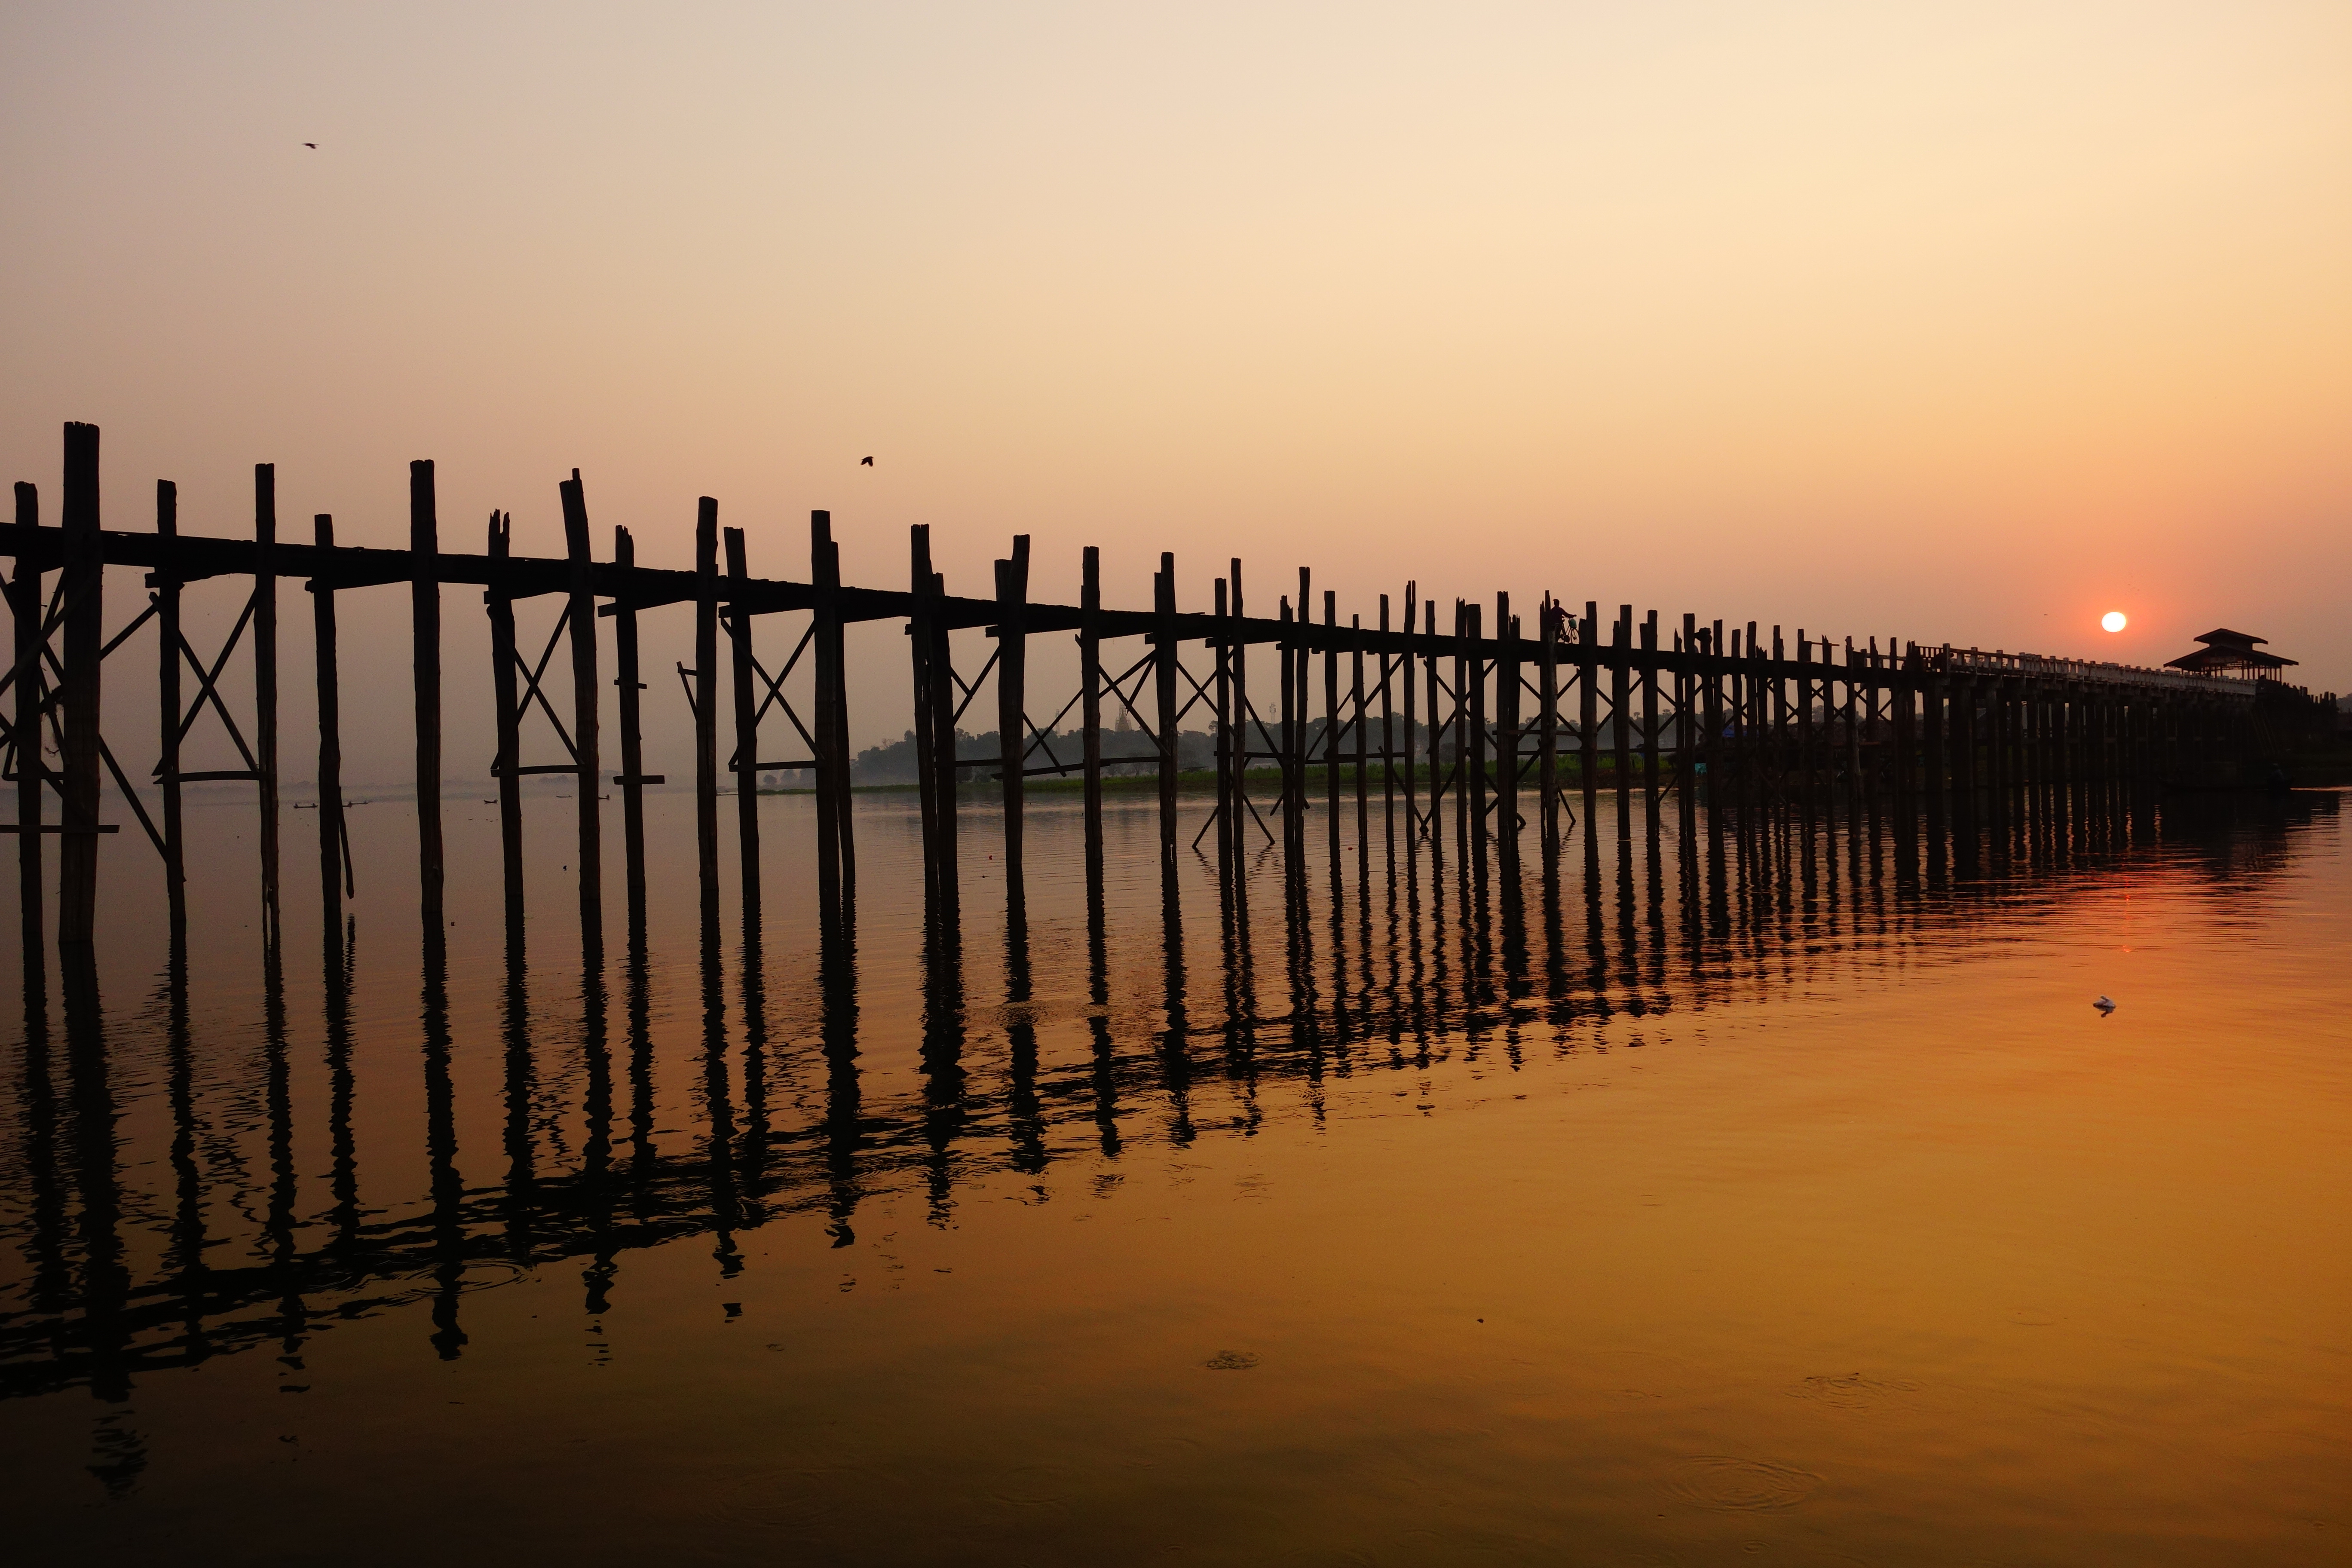 mandalay pont le plus long du monde en teck photo voyage tour du monde birmanie mondalay http://yoytourdumonde.fr